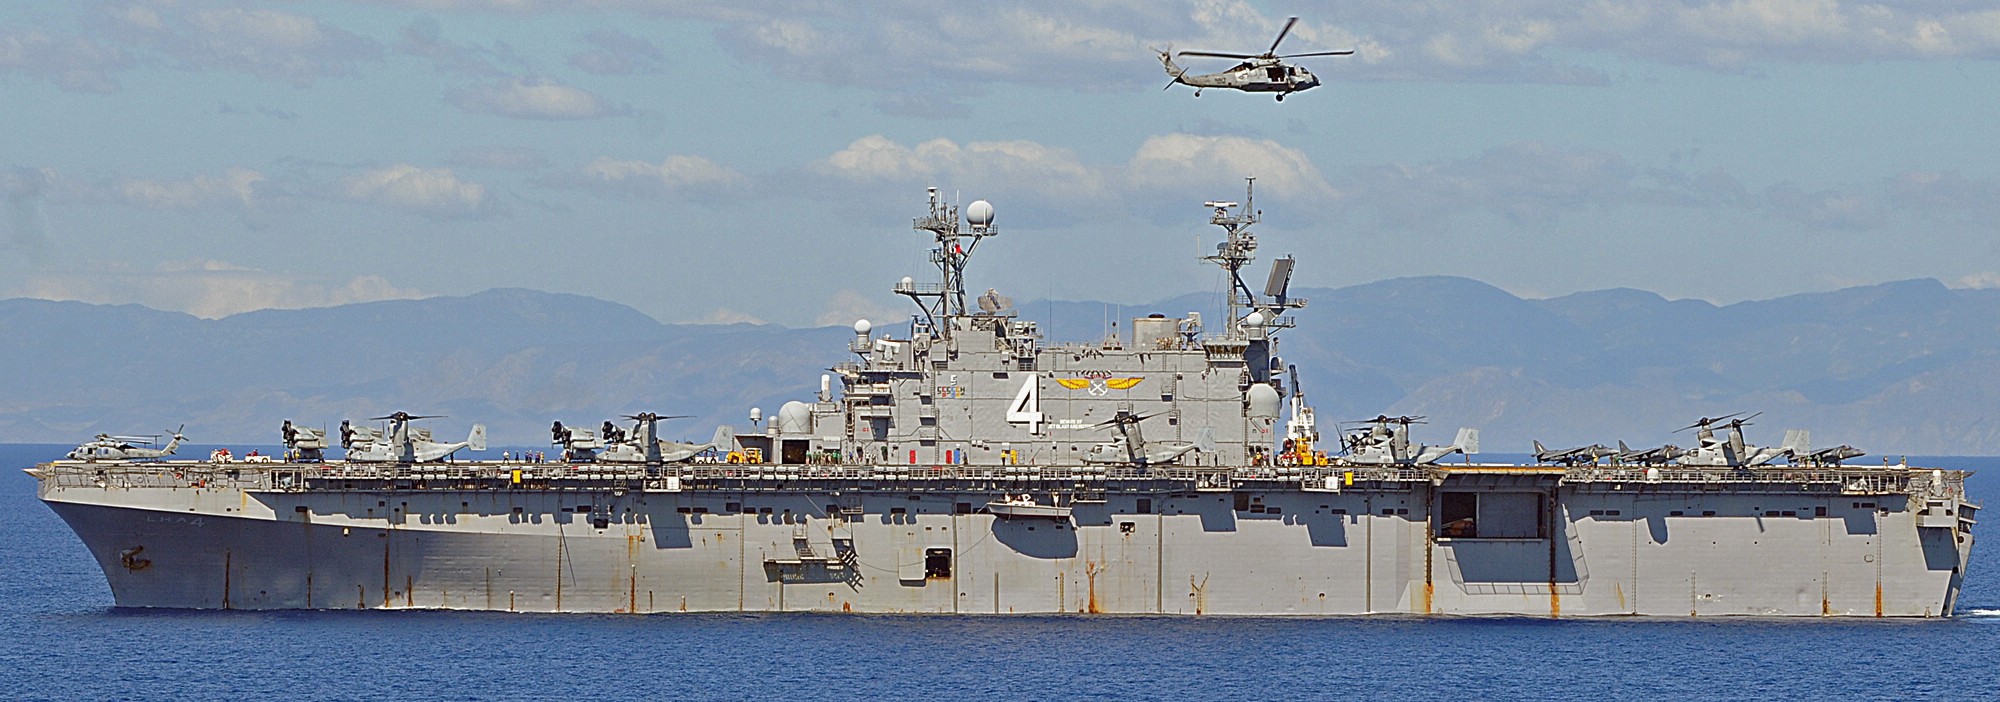 lha-4 uss nassau tarawa class amphibious assault ship us navy 47